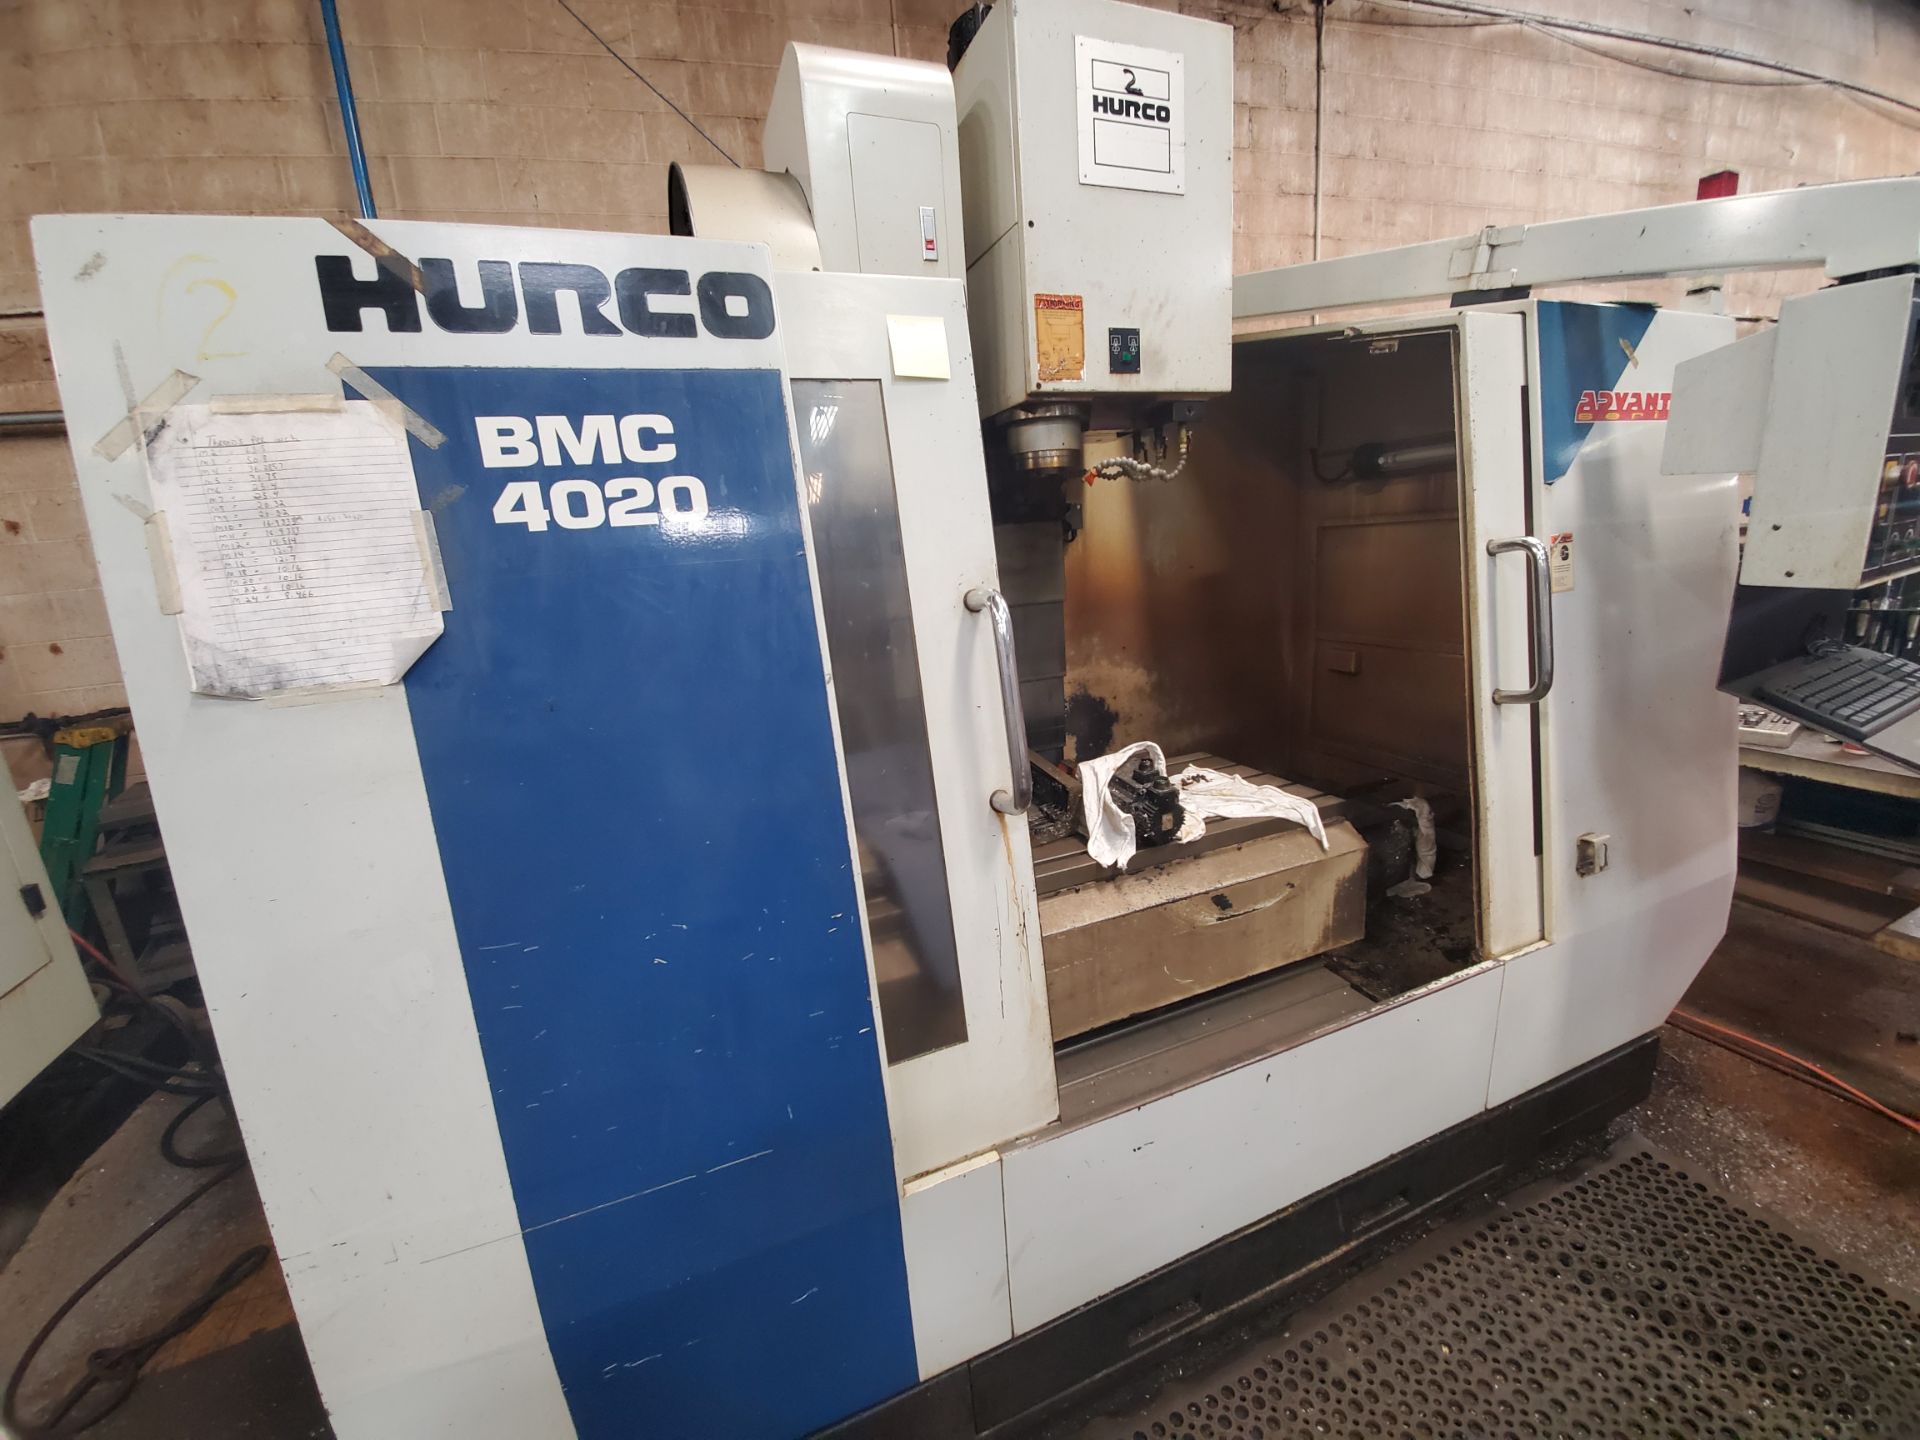 Hurco BMC-4020 CNC Vertical Machining Center